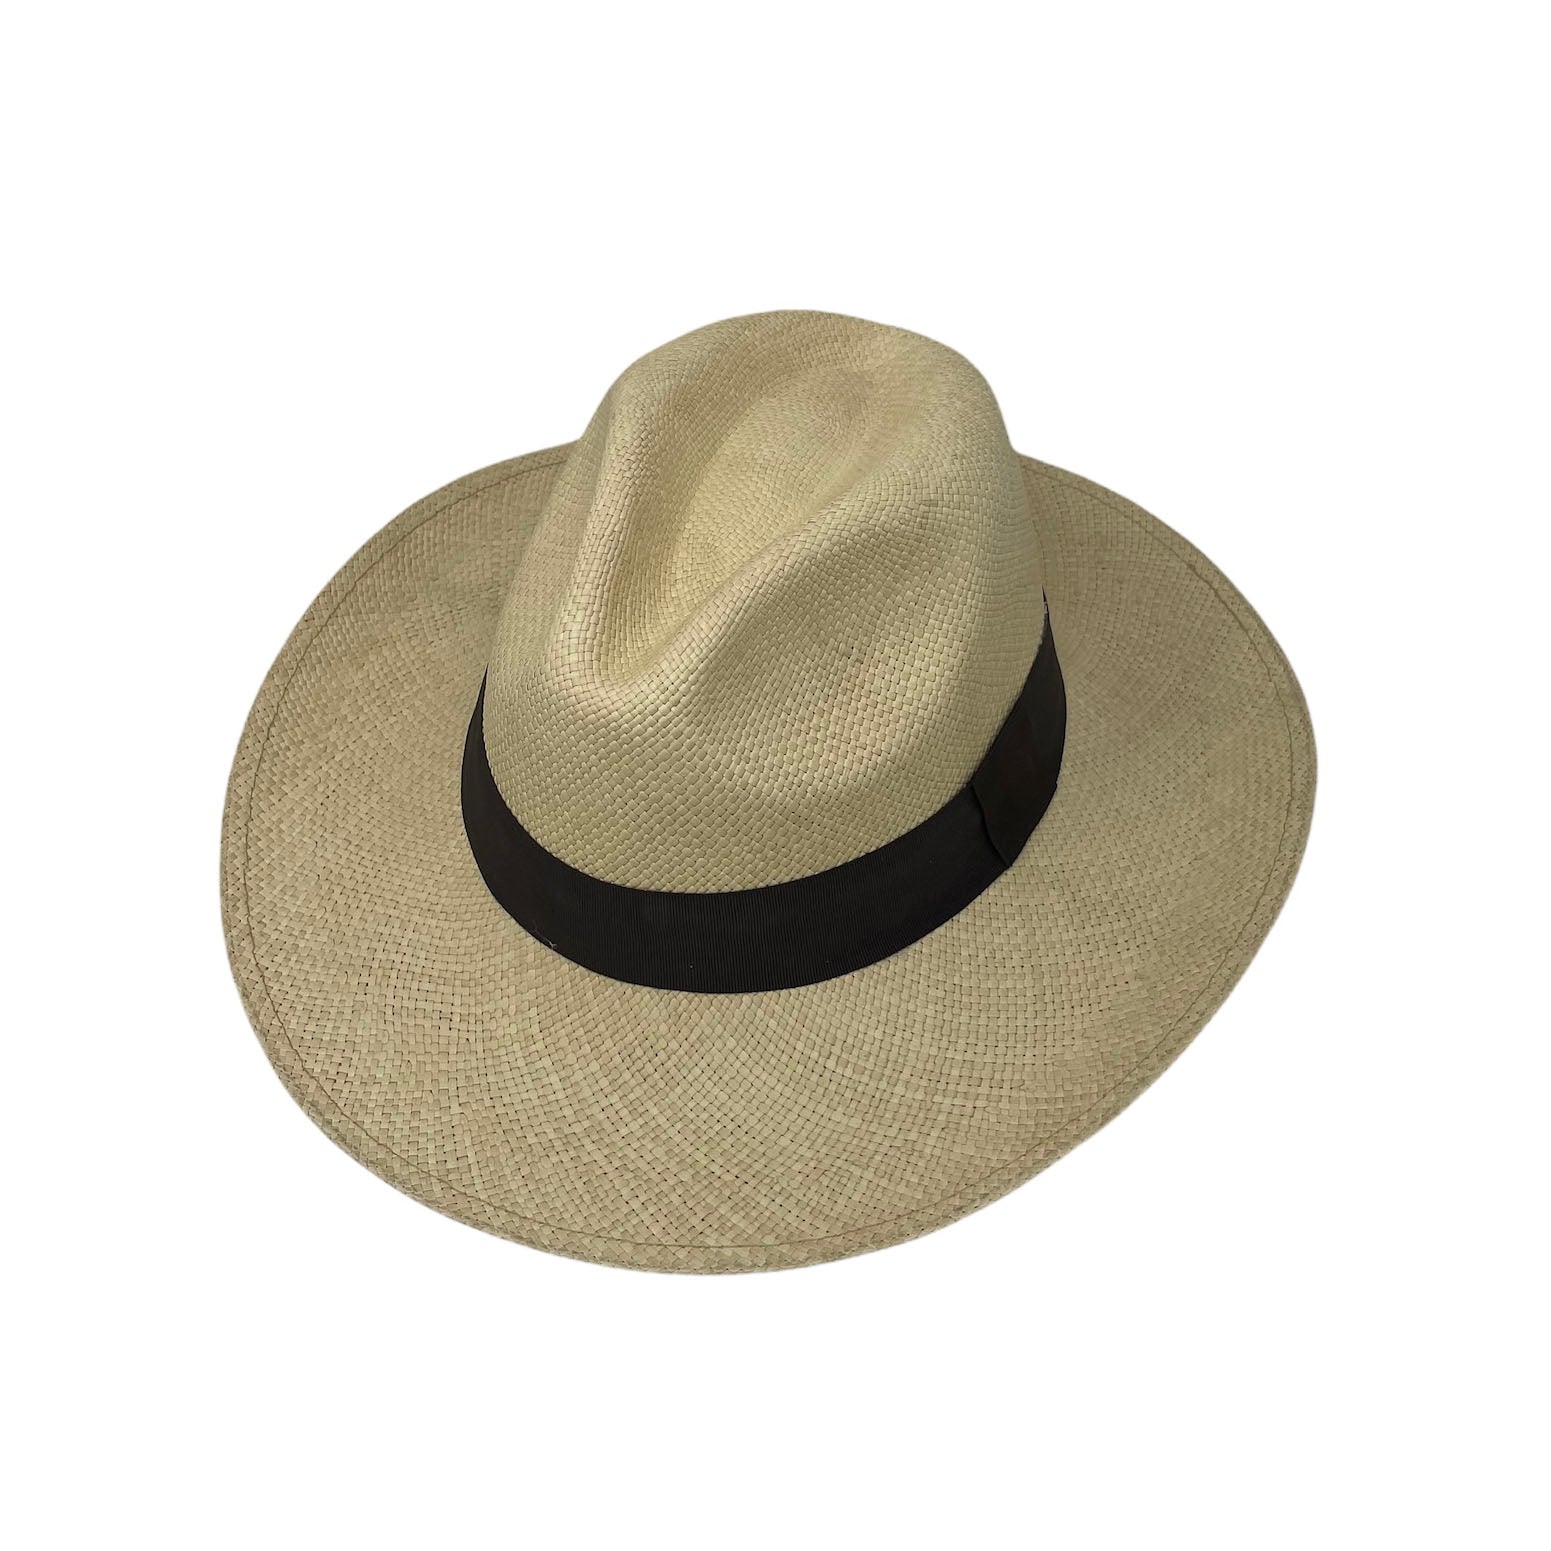 Classic Panama Straw Hat - Natural